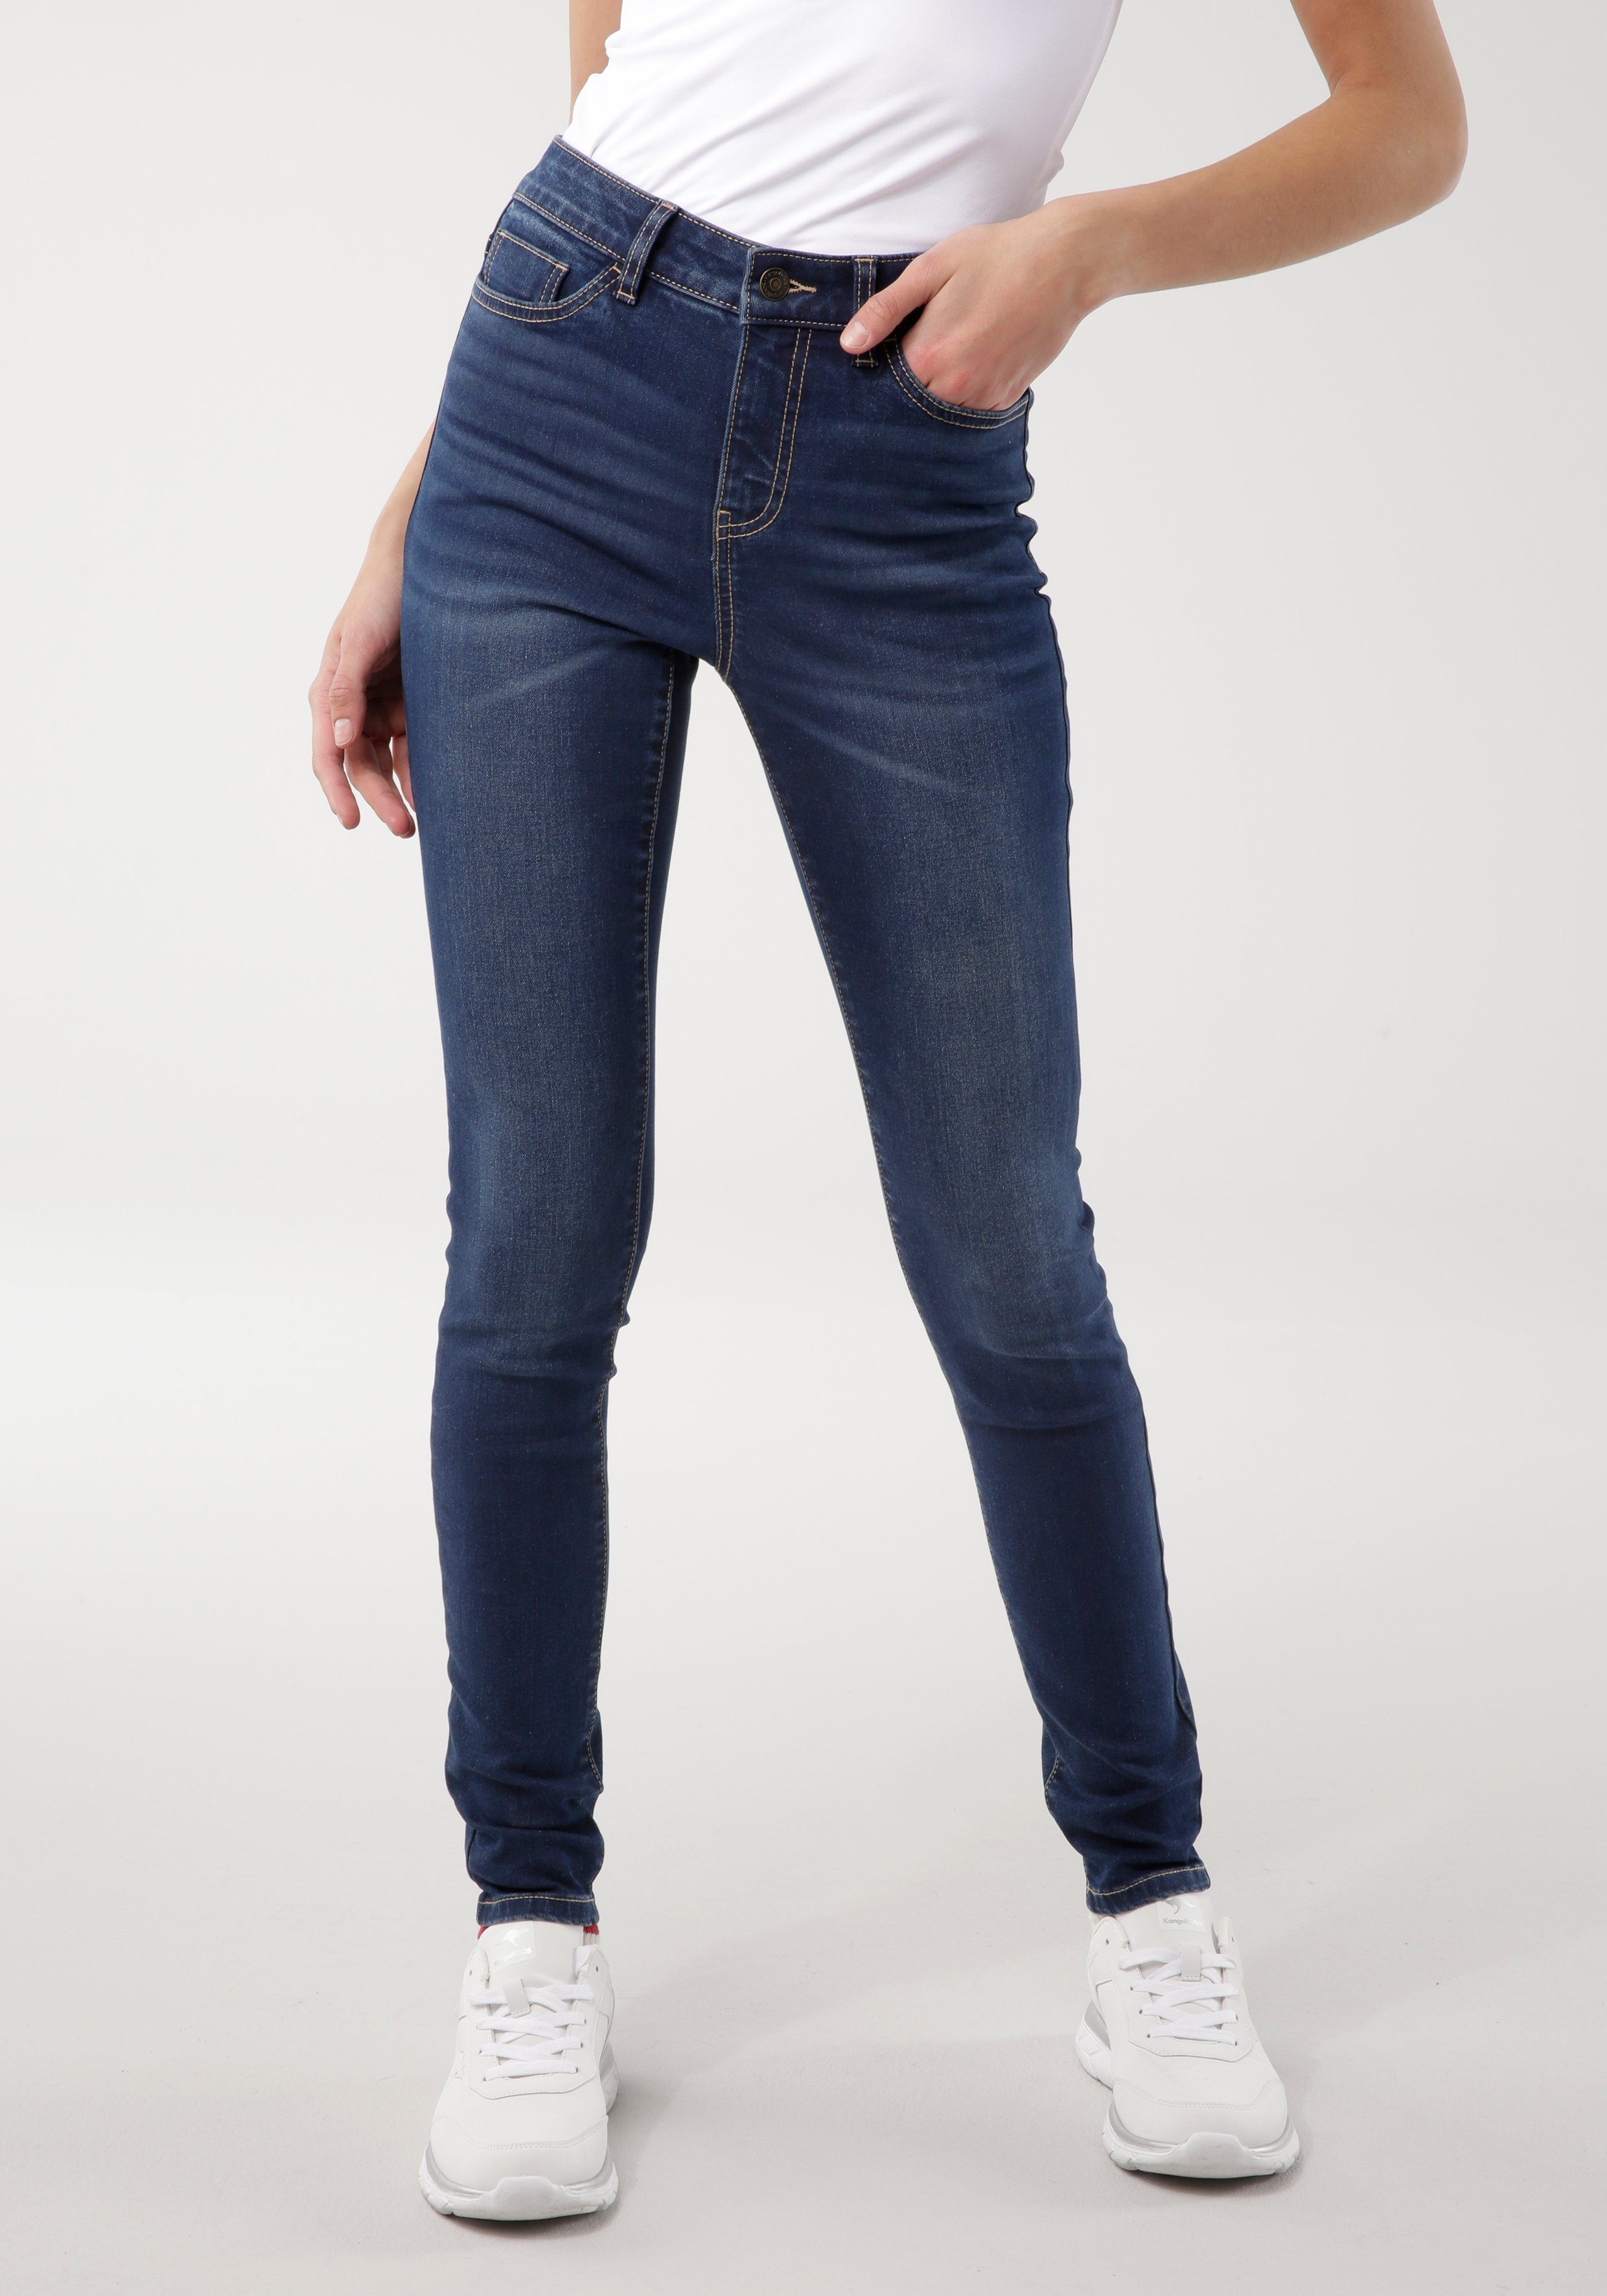 KangaROOS 5-Pocket-Jeans SUPER SKINNY HIGH RISE mit used-Effekt darkblue-used | Stretchjeans